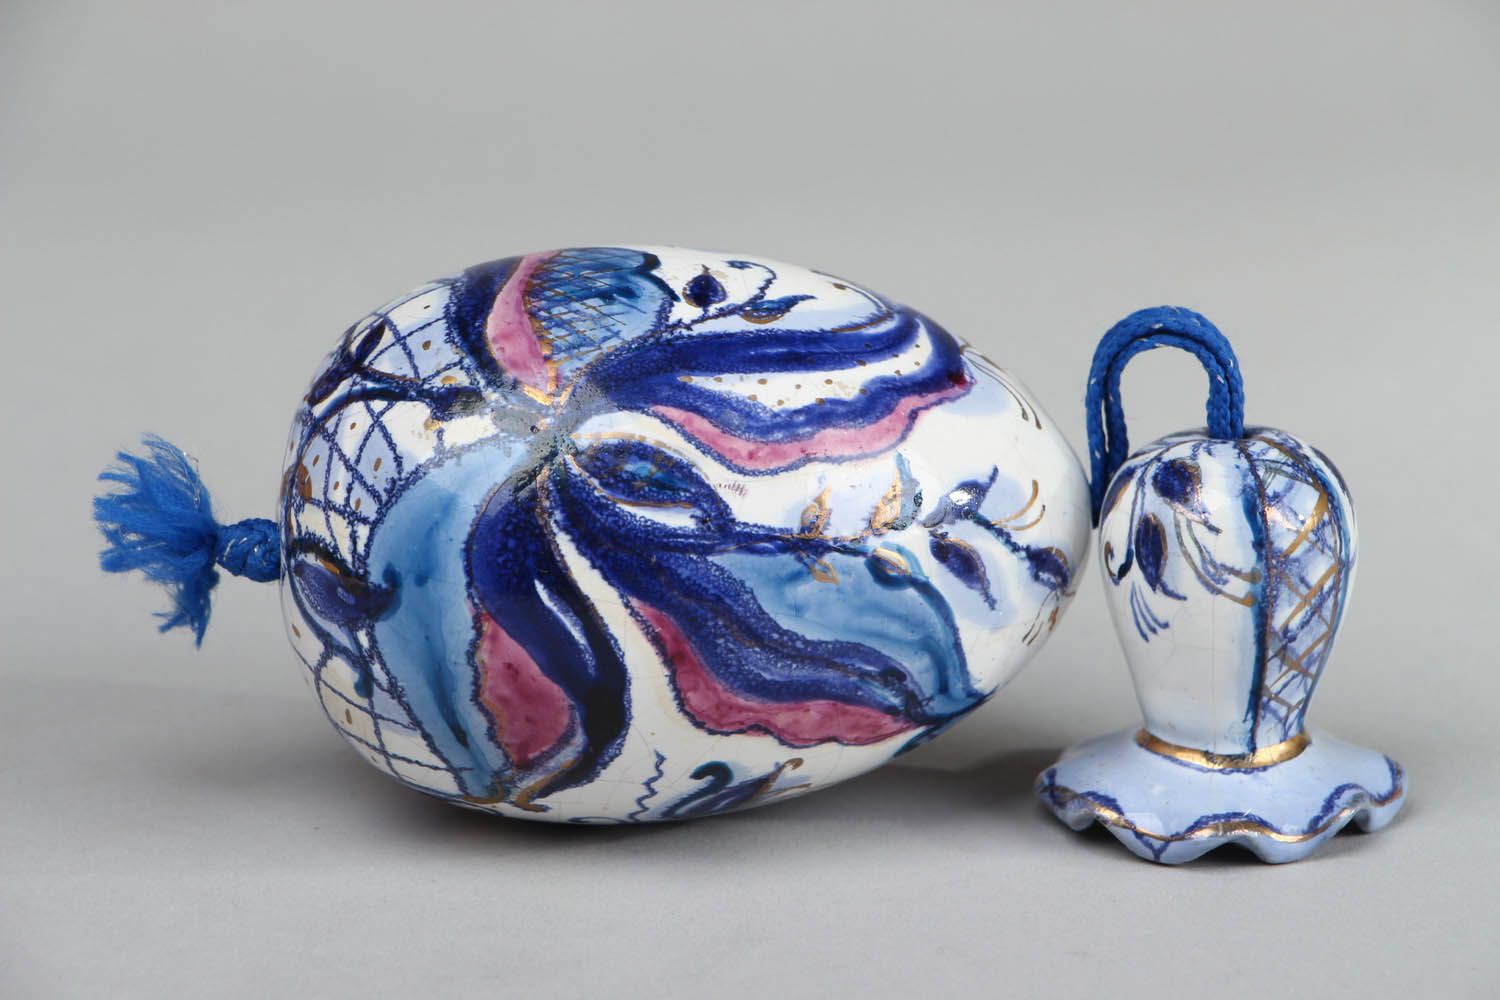 Ceramic decorative egg photo 1